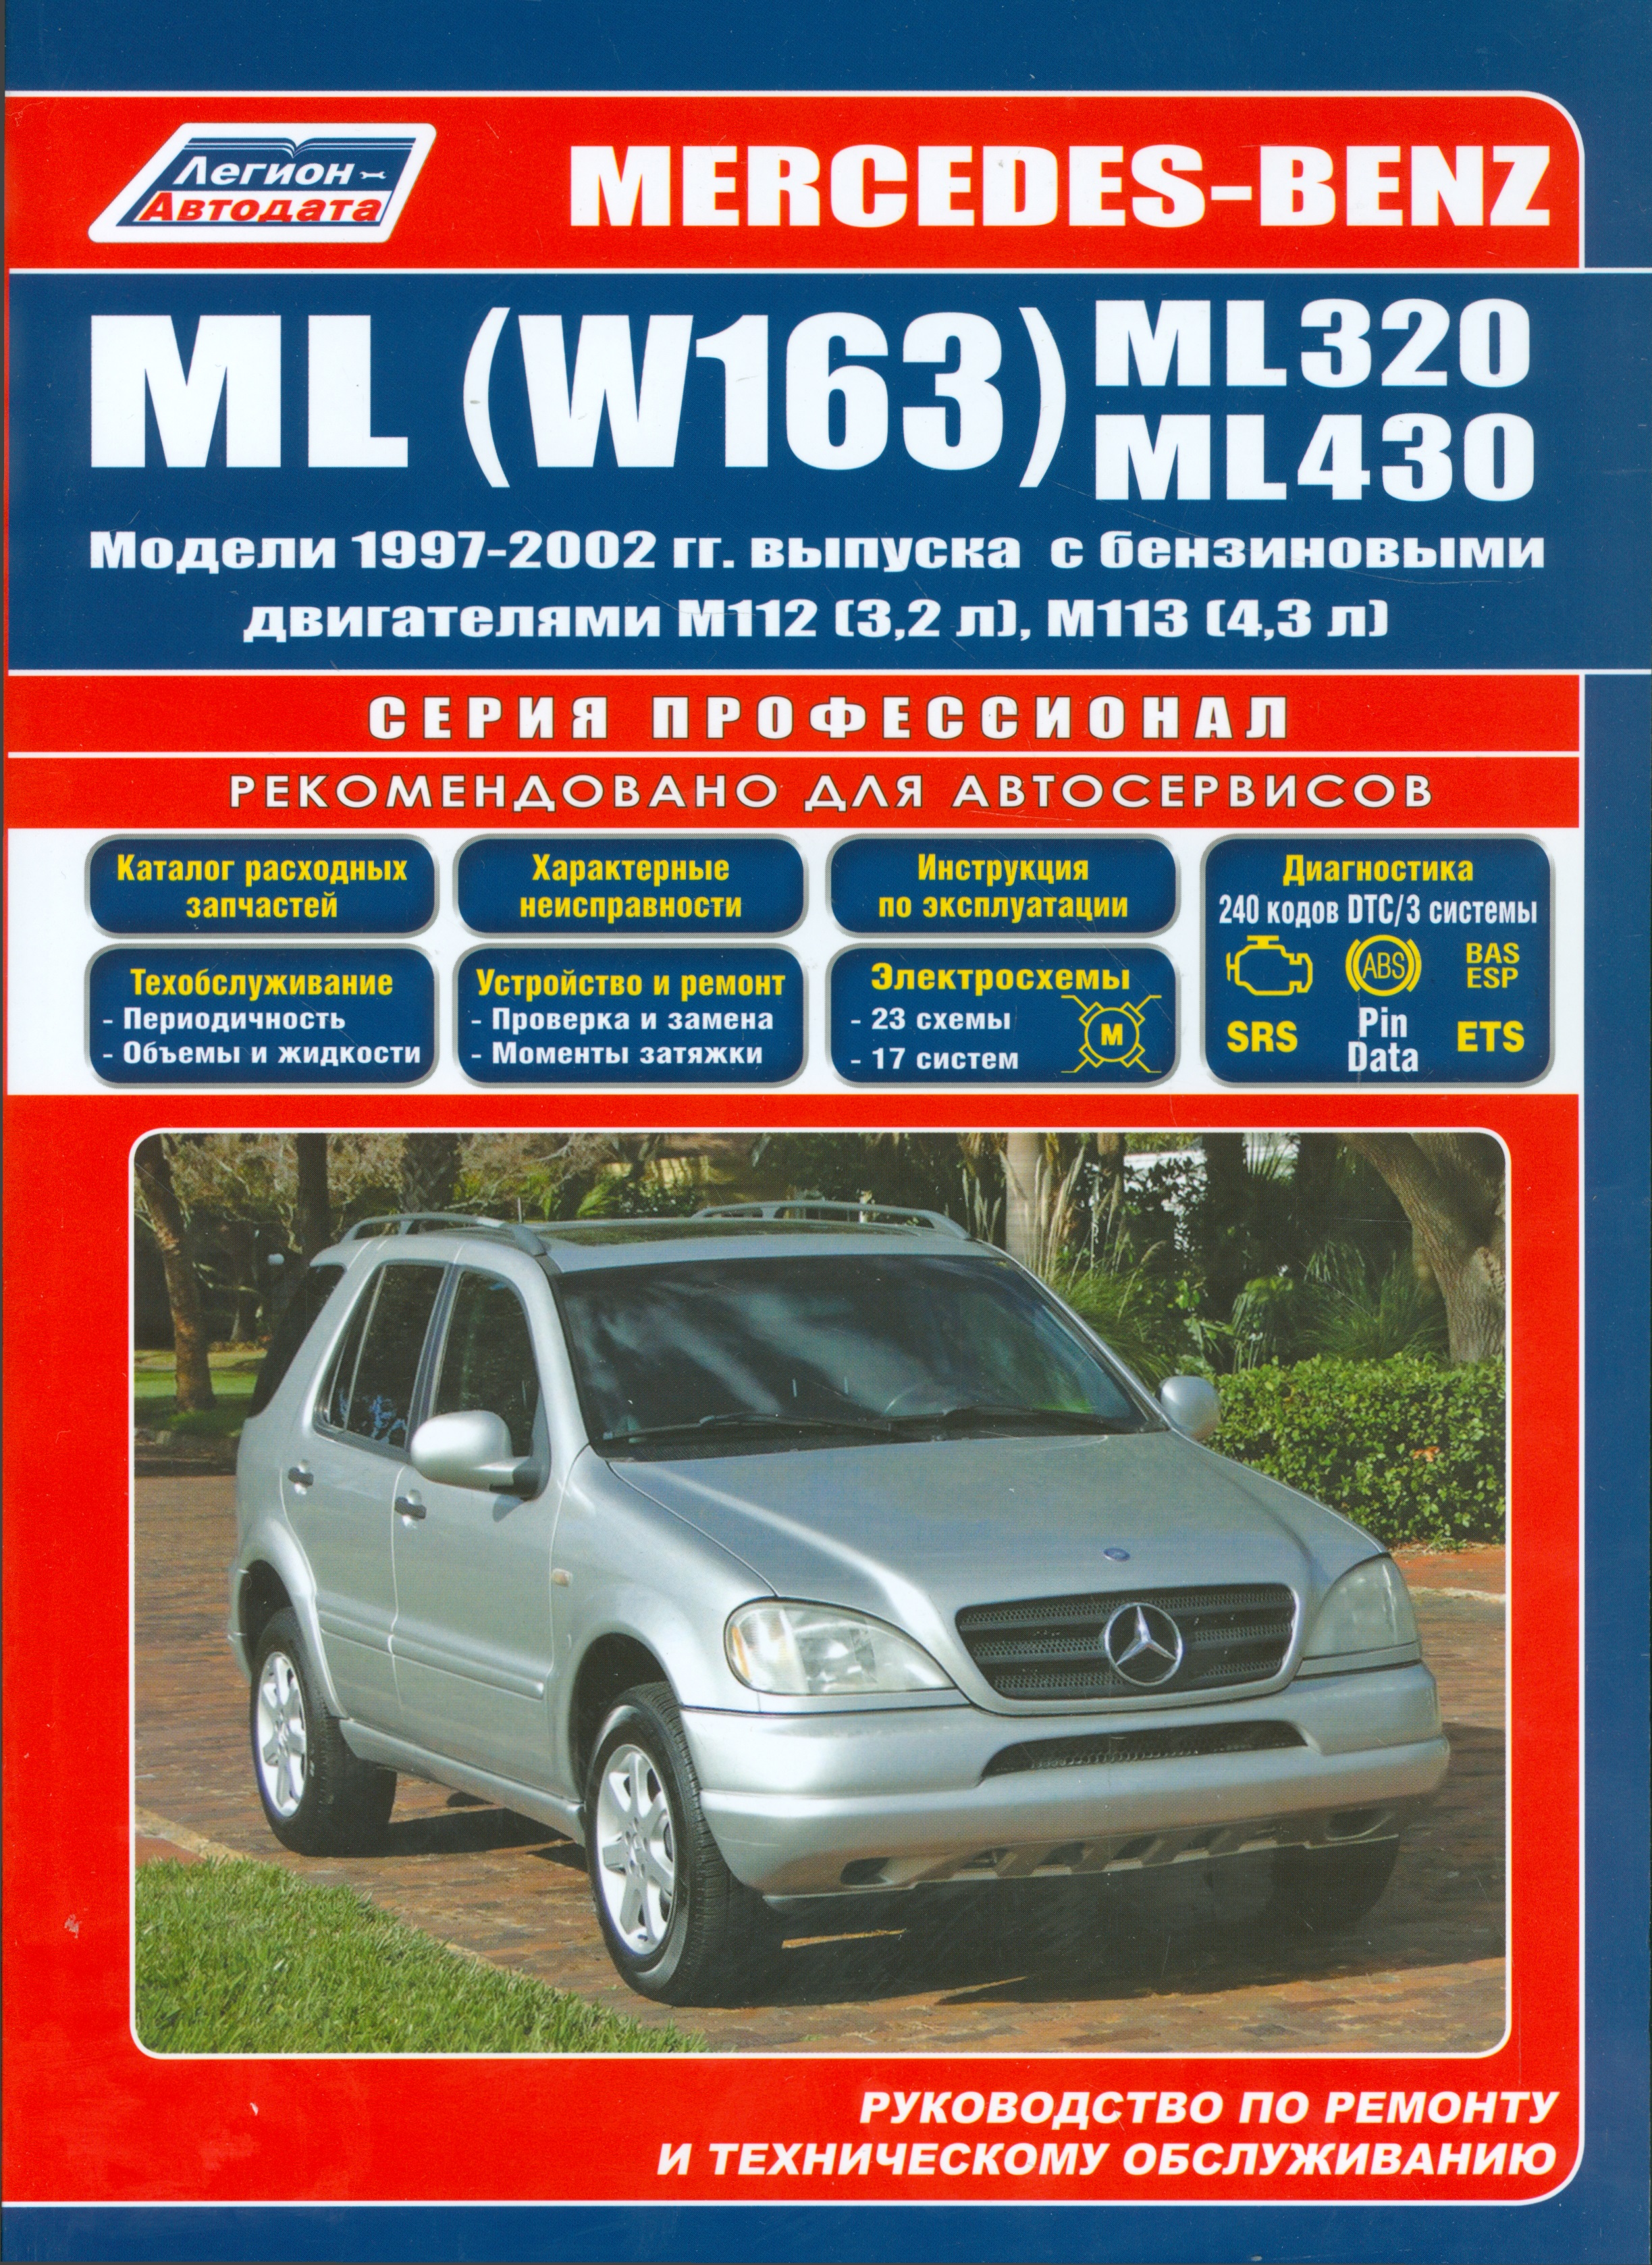 Mercedes-Benz ML (W163) ML320 ML430 Мод. 1997-2002 гг. вып. С бенз. (мПрофессионал) new power window switch for mercedes benz w163 ml230 ml270 ml320 ml350 ml430 1638206610 1638202410 1638200910